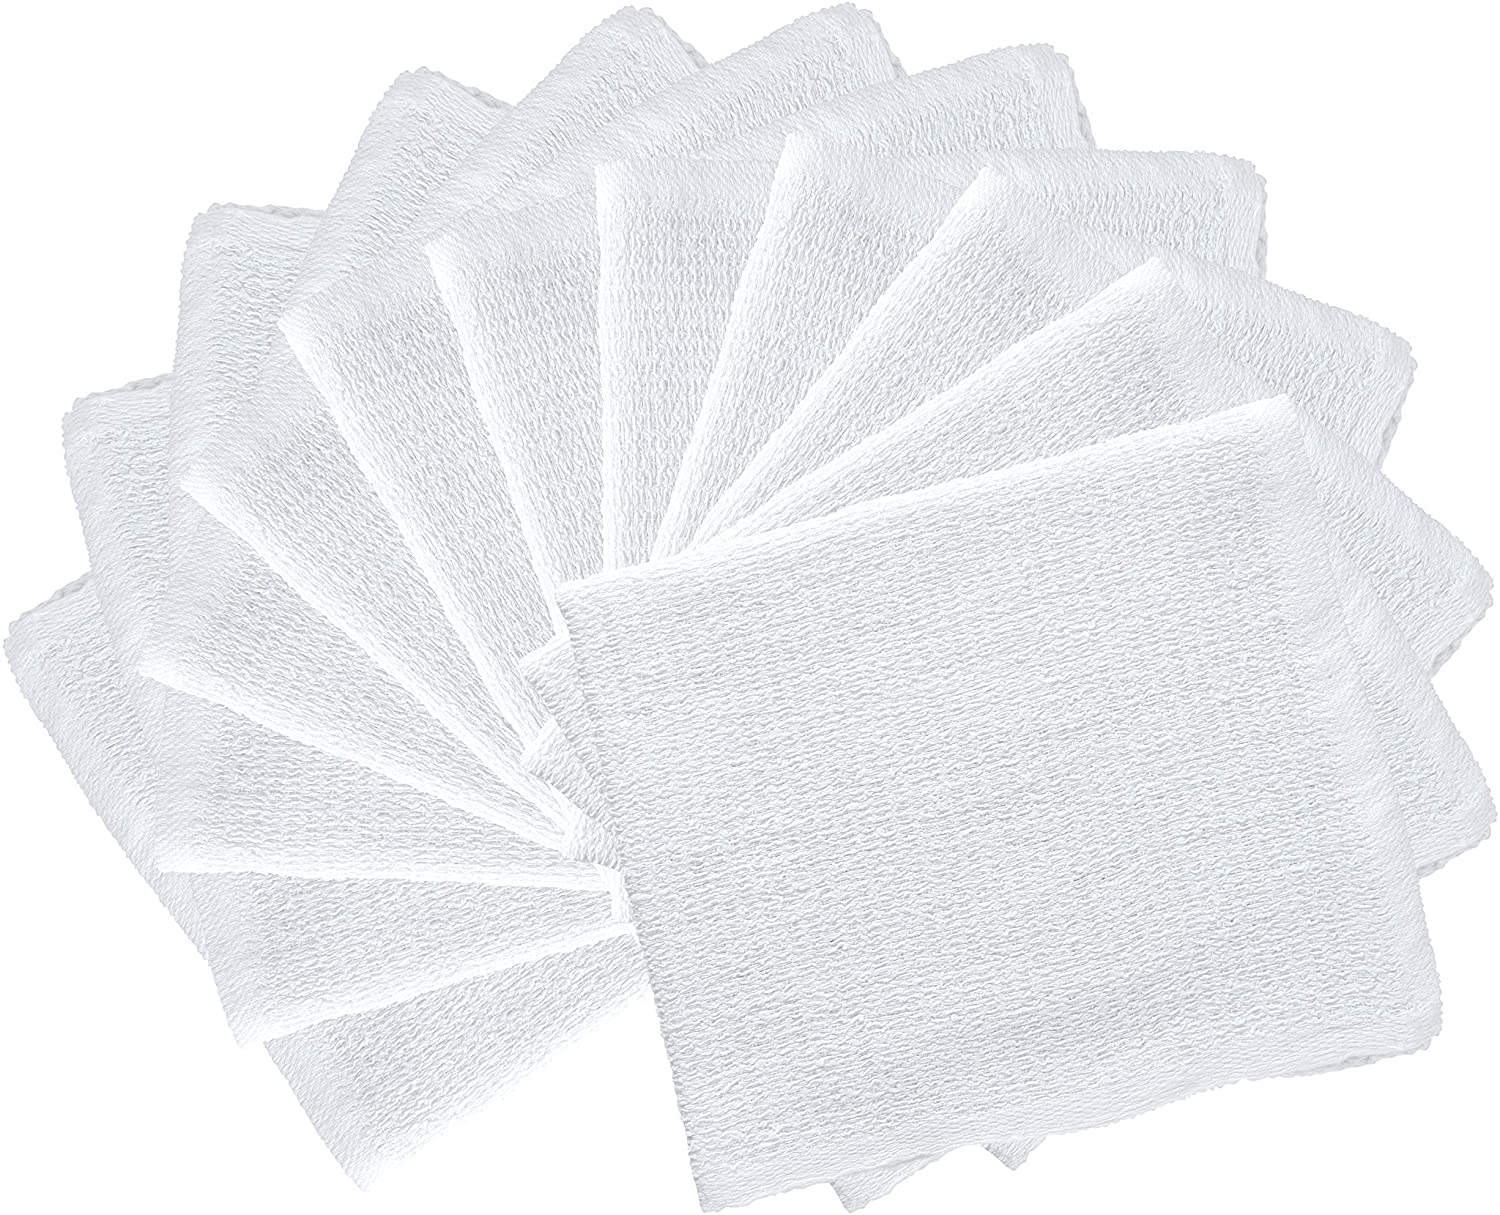 2/3/5PCS/Set Cotton Gauze Cleaning Cloth Rag Absorbent Washing